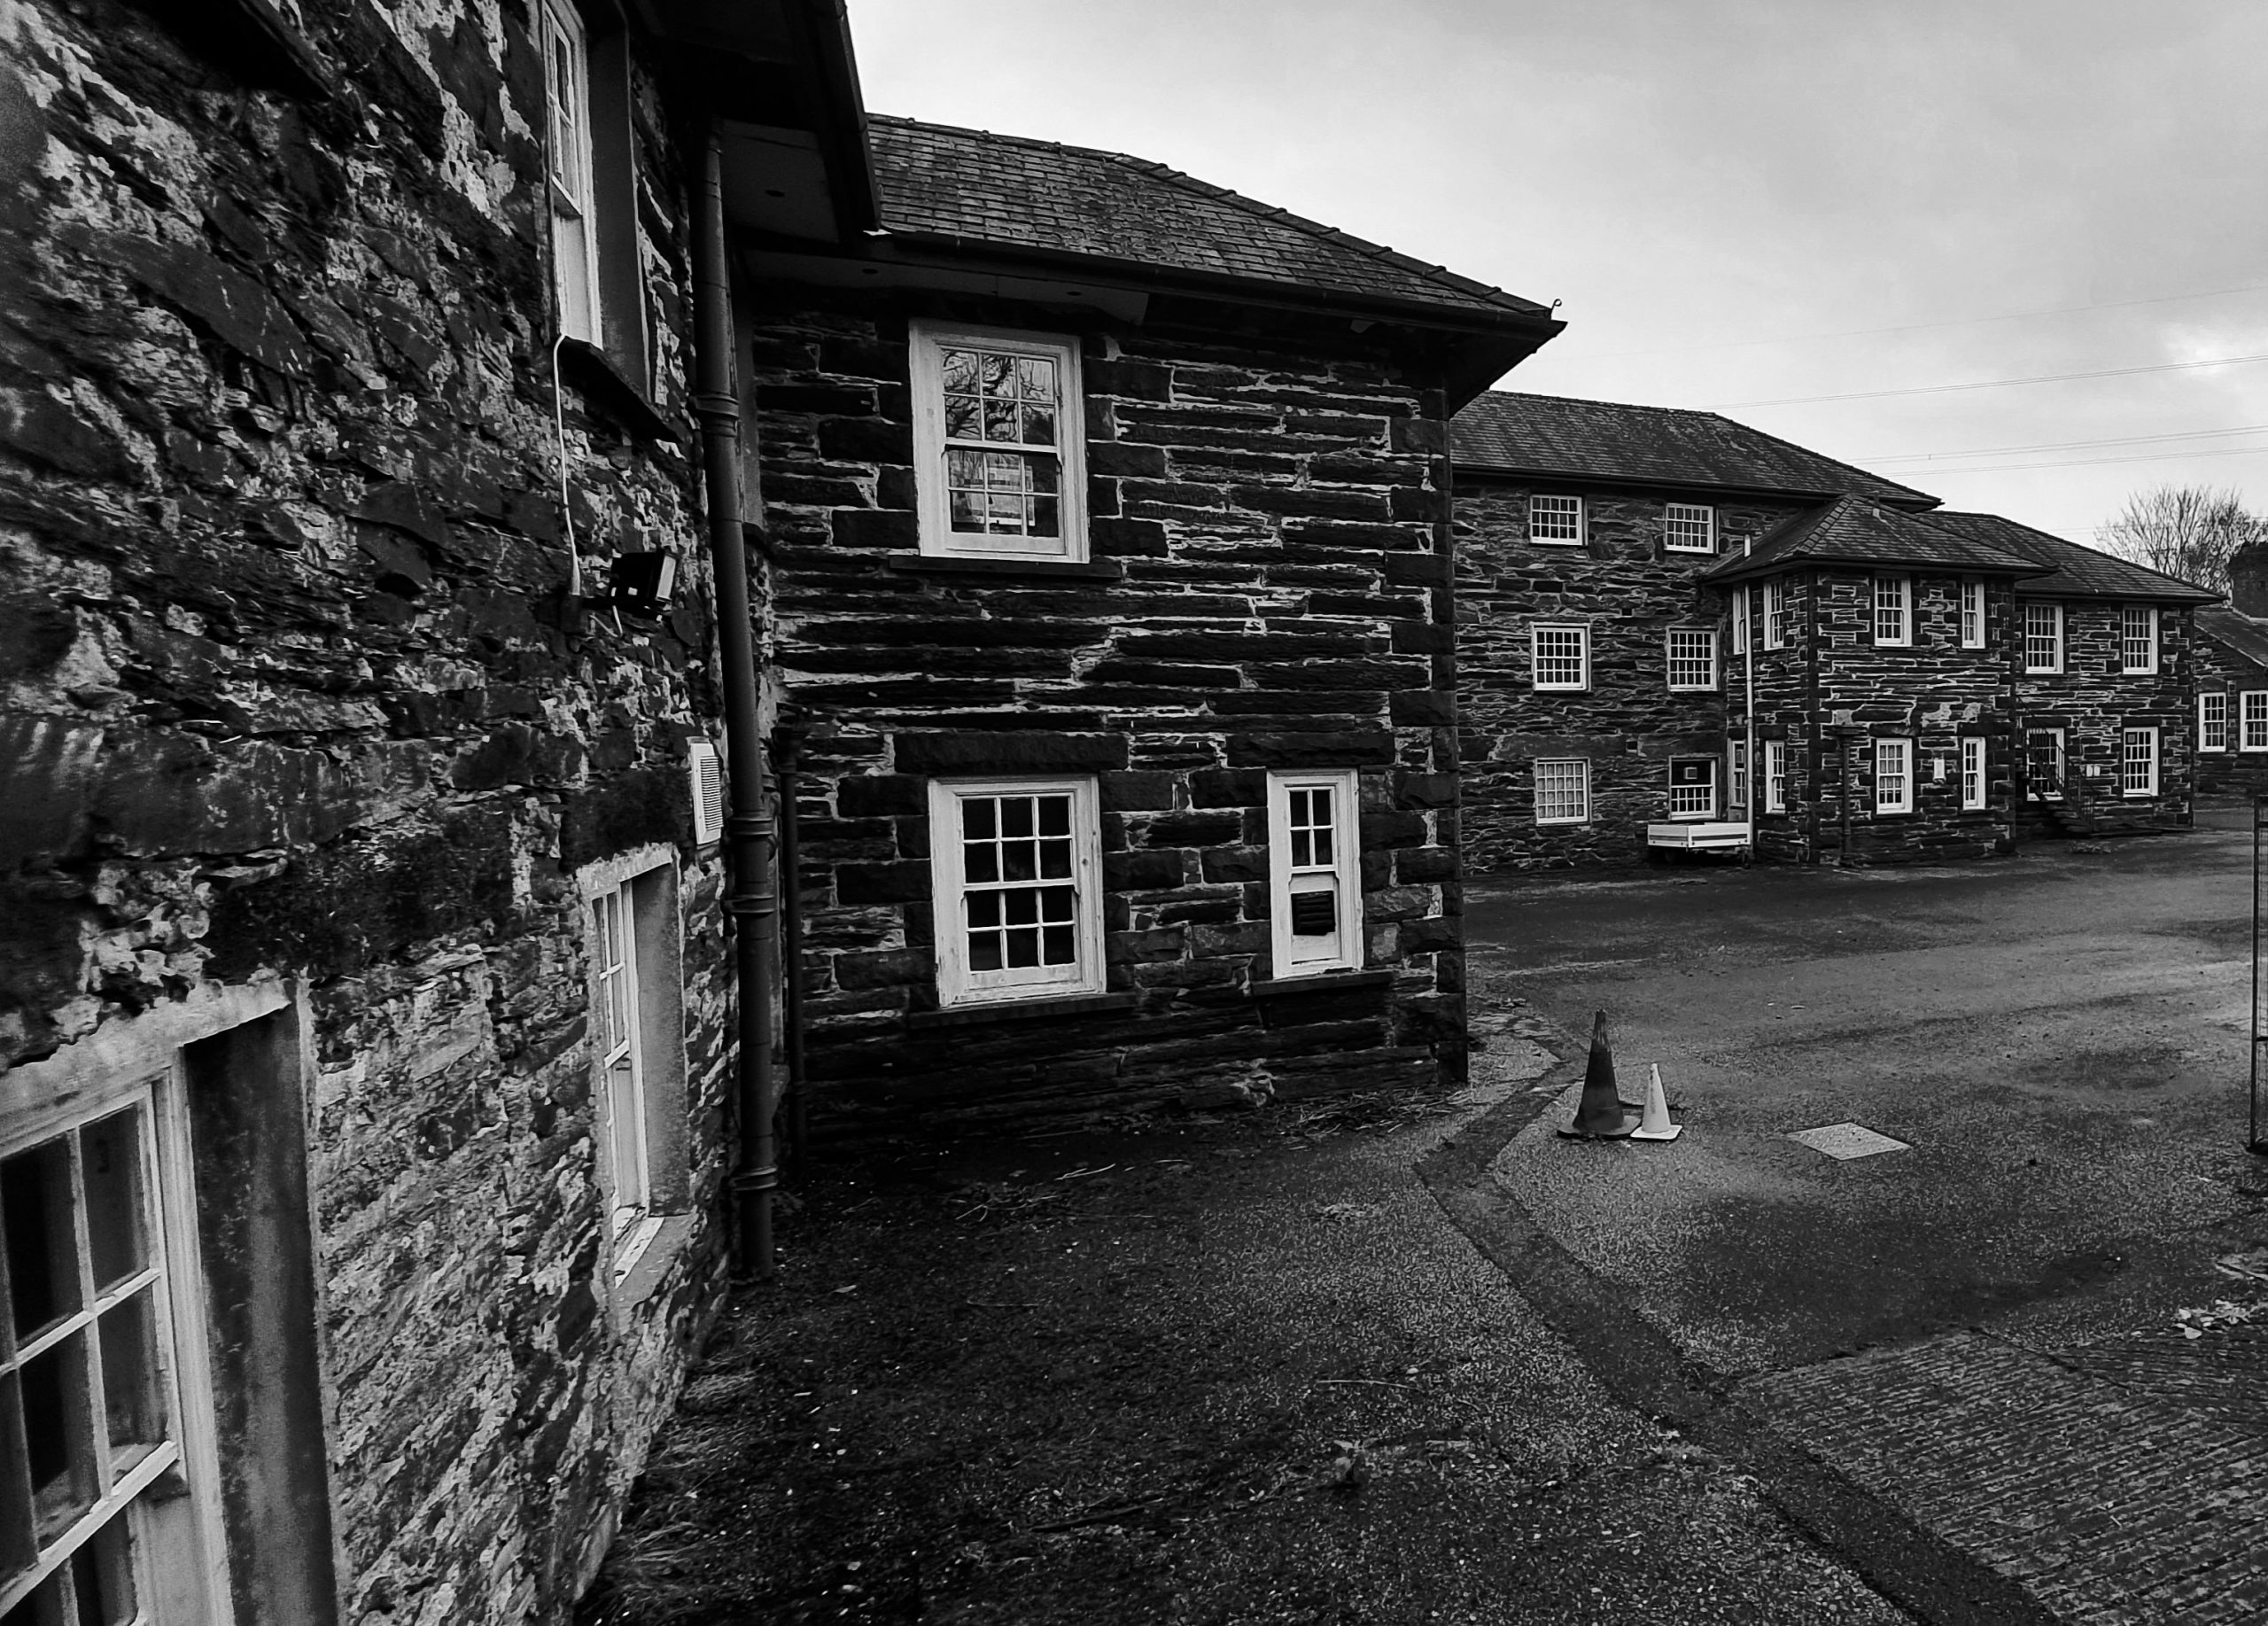 Bron Y Garth Abandoned Hospital and Prison Sleepover Ghost Hunt Gwynedd Wales Thumbnail Image